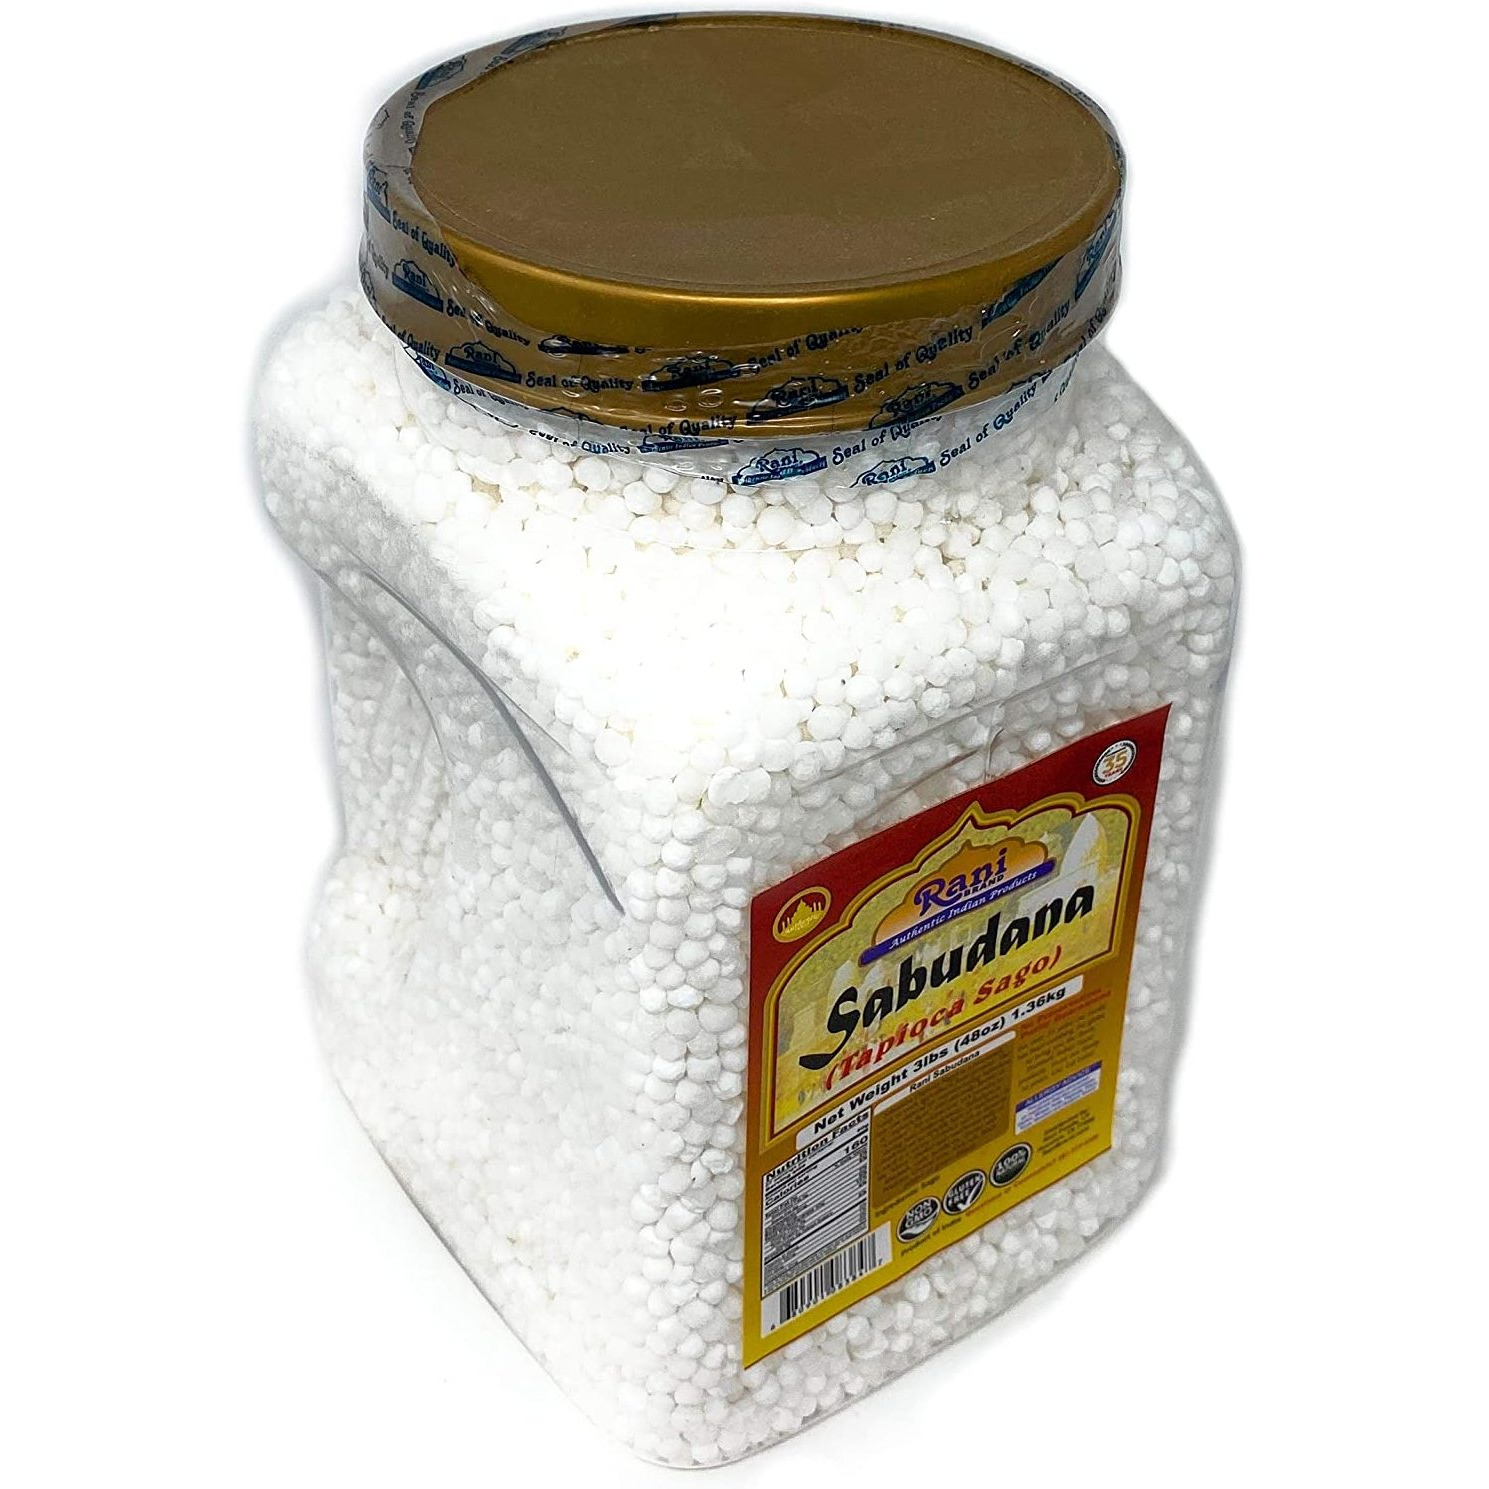 Rani Sabudana (Tapioca / Sago) Pearls 3lbs (48oz) Pet Jar Bulk ~ All Natural | Vegan | No Colors | NON-GMO | Indian Origin